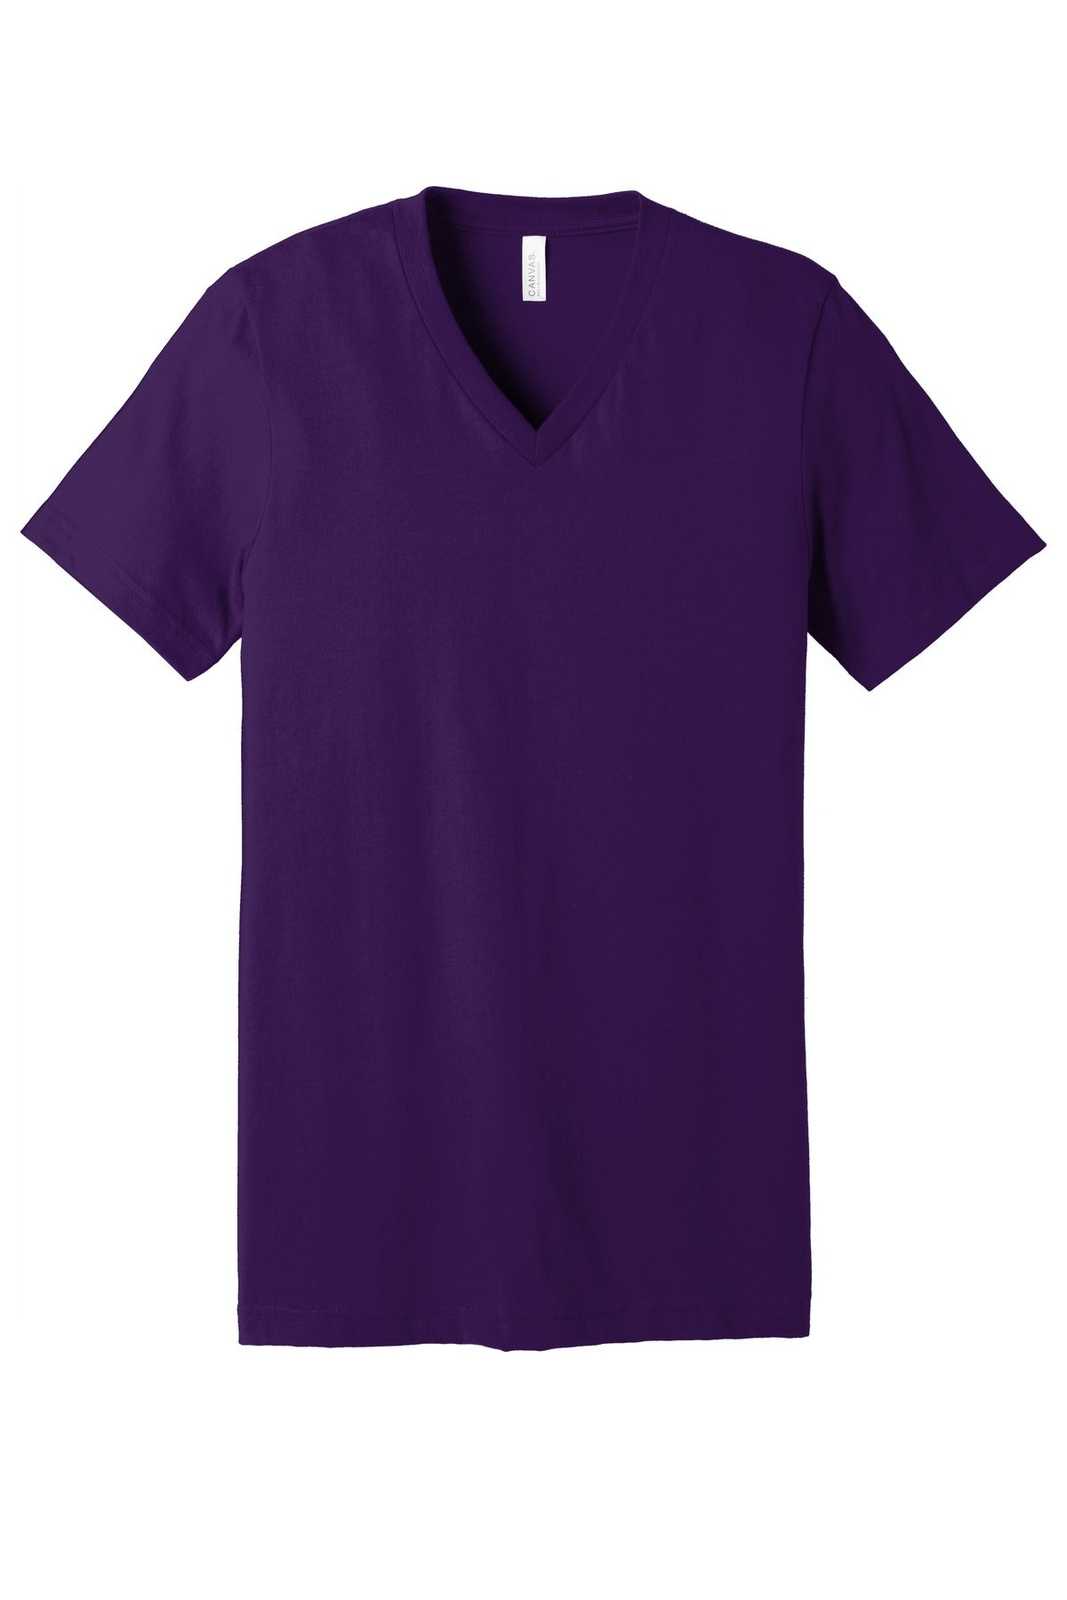 Bella + Canvas 3005 Unisex Jersey Short Sleeve V-Neck Tee - Team Purple - HIT a Double